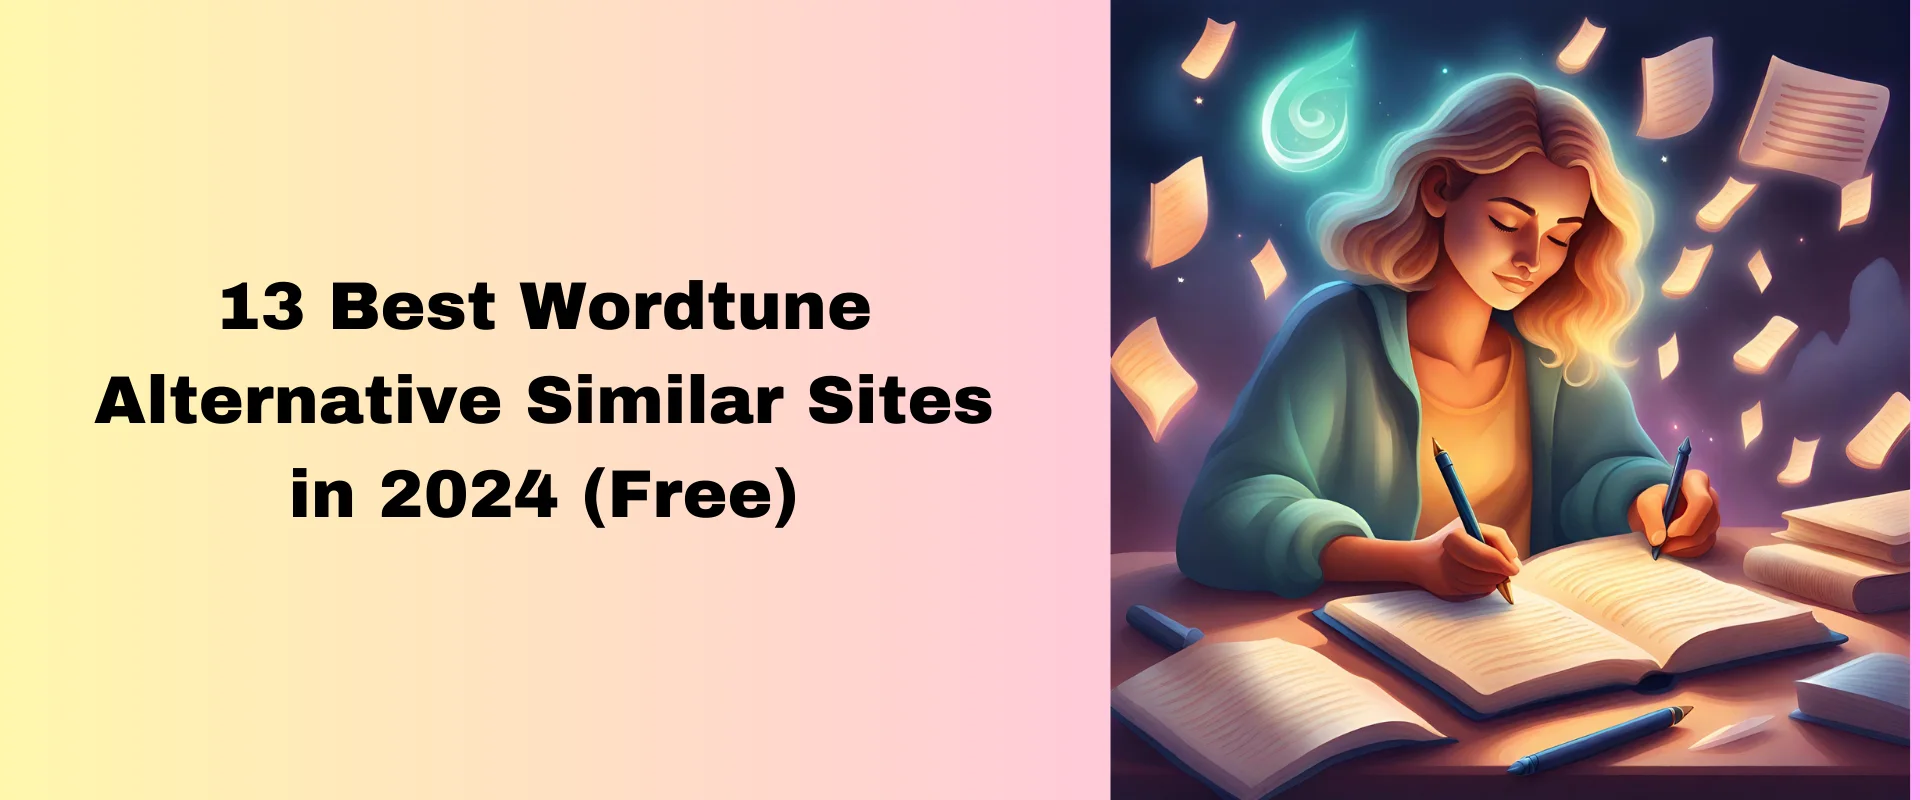 13 Best Wordtune Alternative Similar Sites in 2024 (Free)